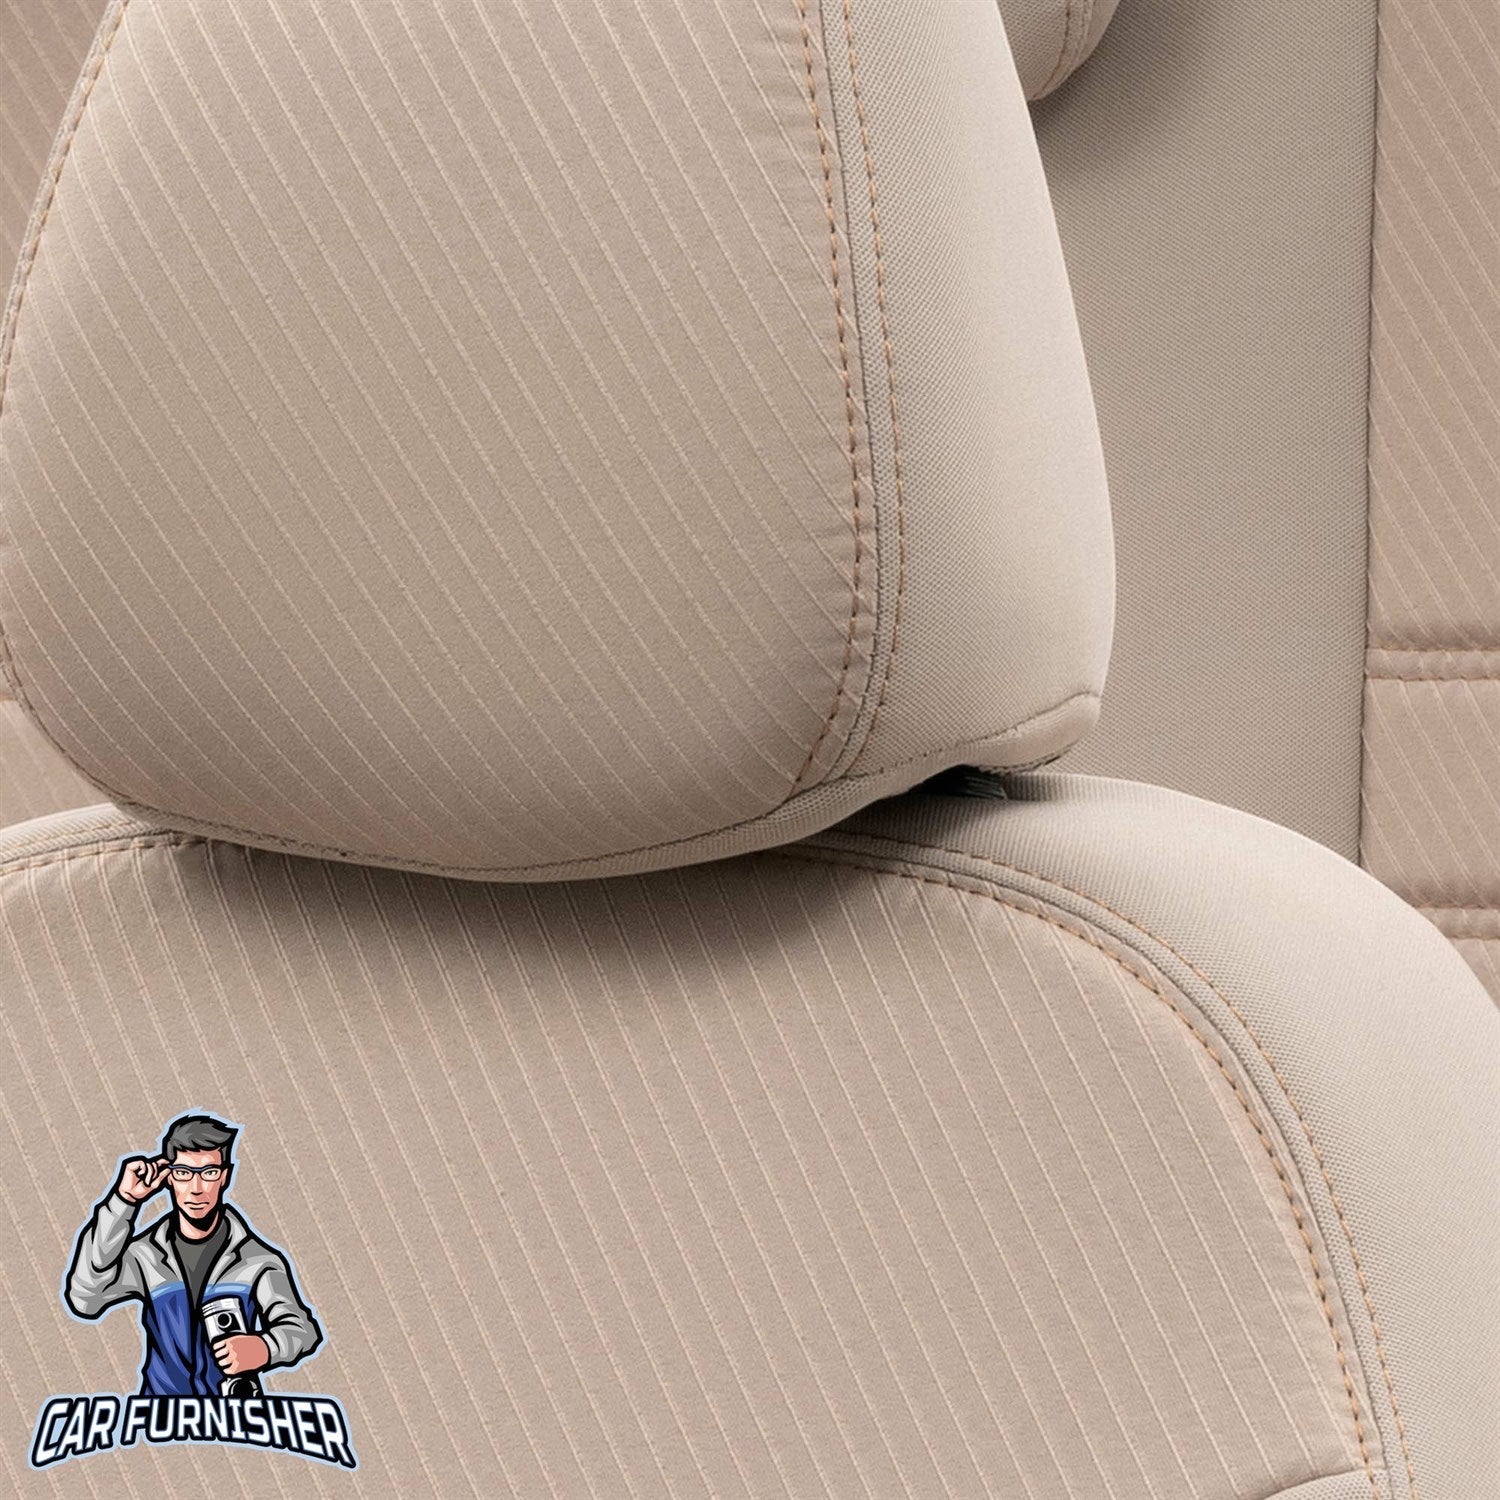 Daf 105 Seat Covers Original Jacquard Design Dark Beige Jacquard Fabric